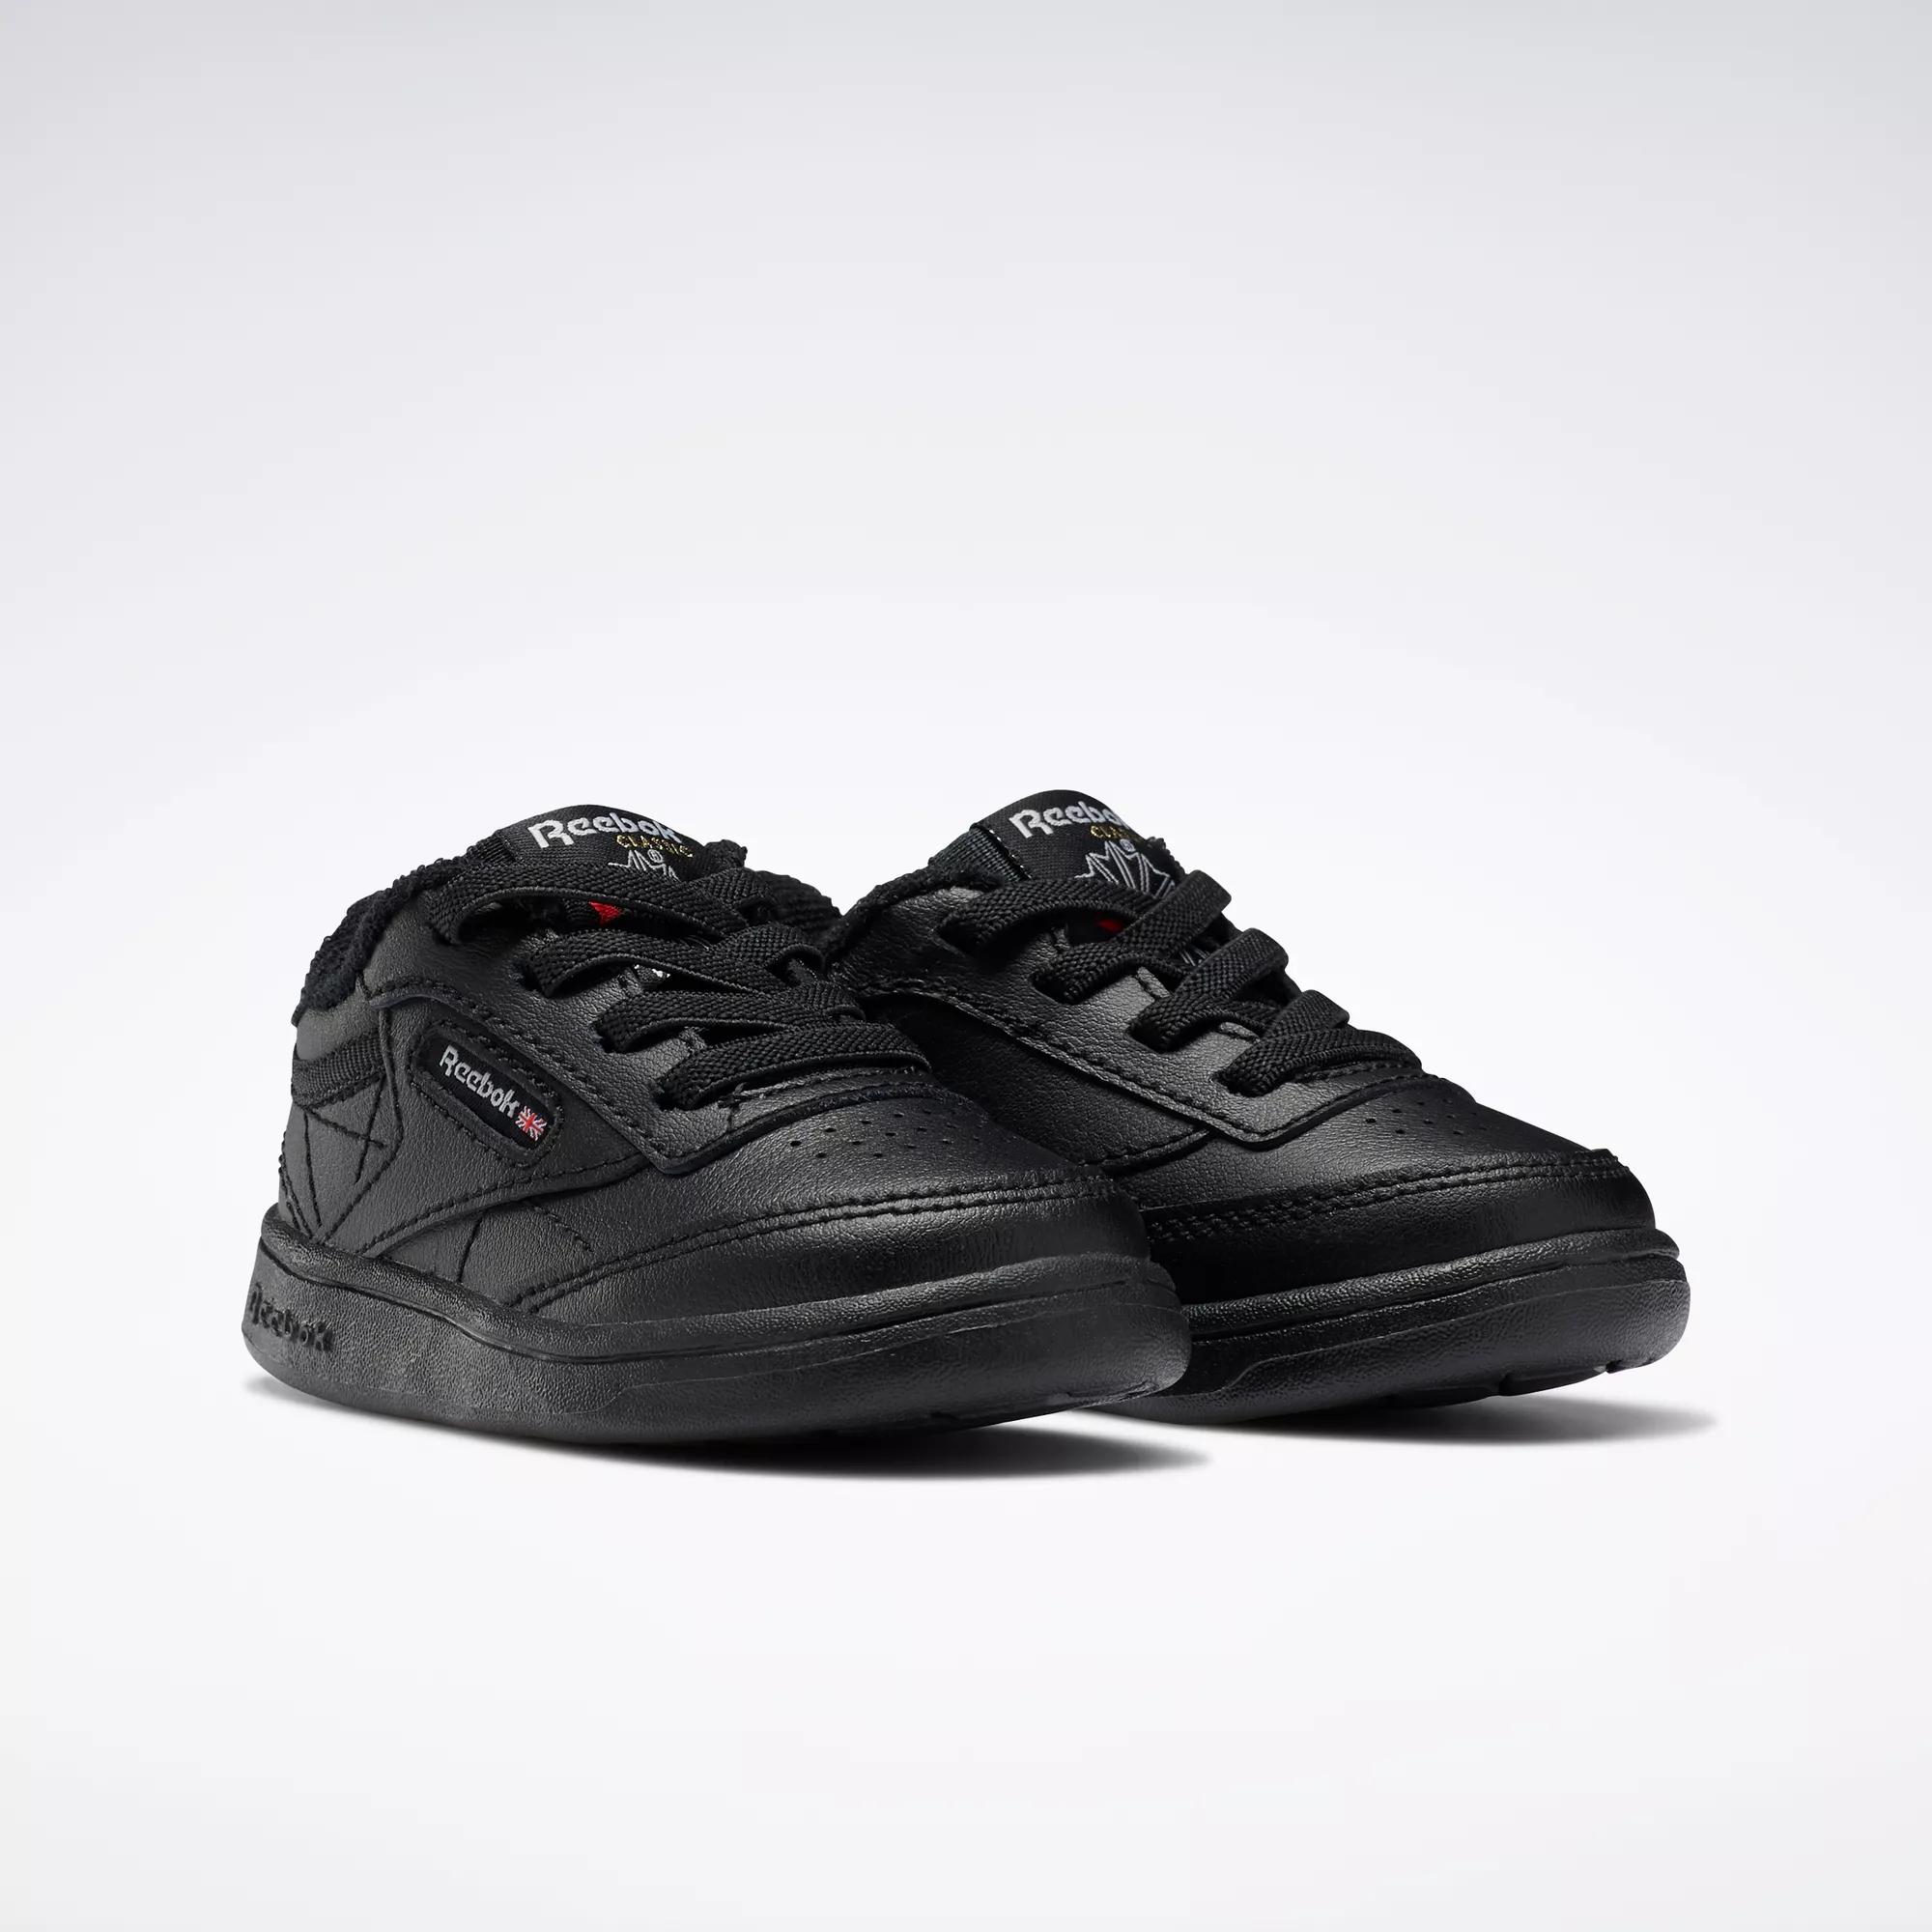 Club C Shoes - Toddler Core Black / Core Black / Core Black | Reebok